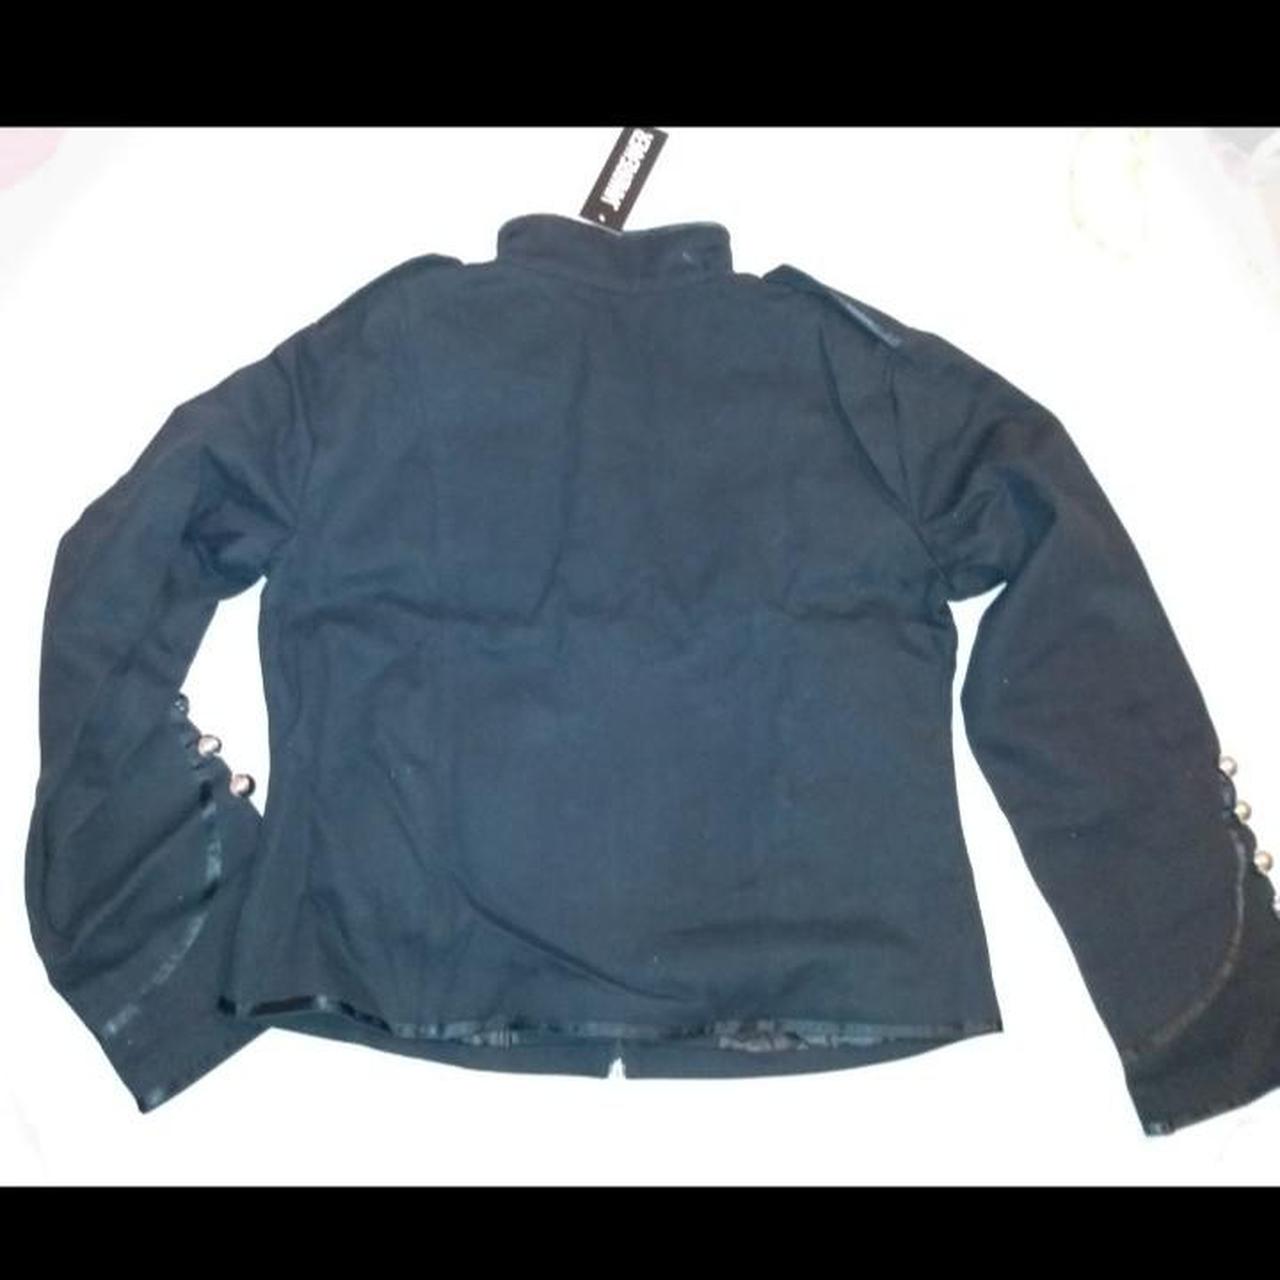 Jawbreaker black jacket with military style satin... - Depop